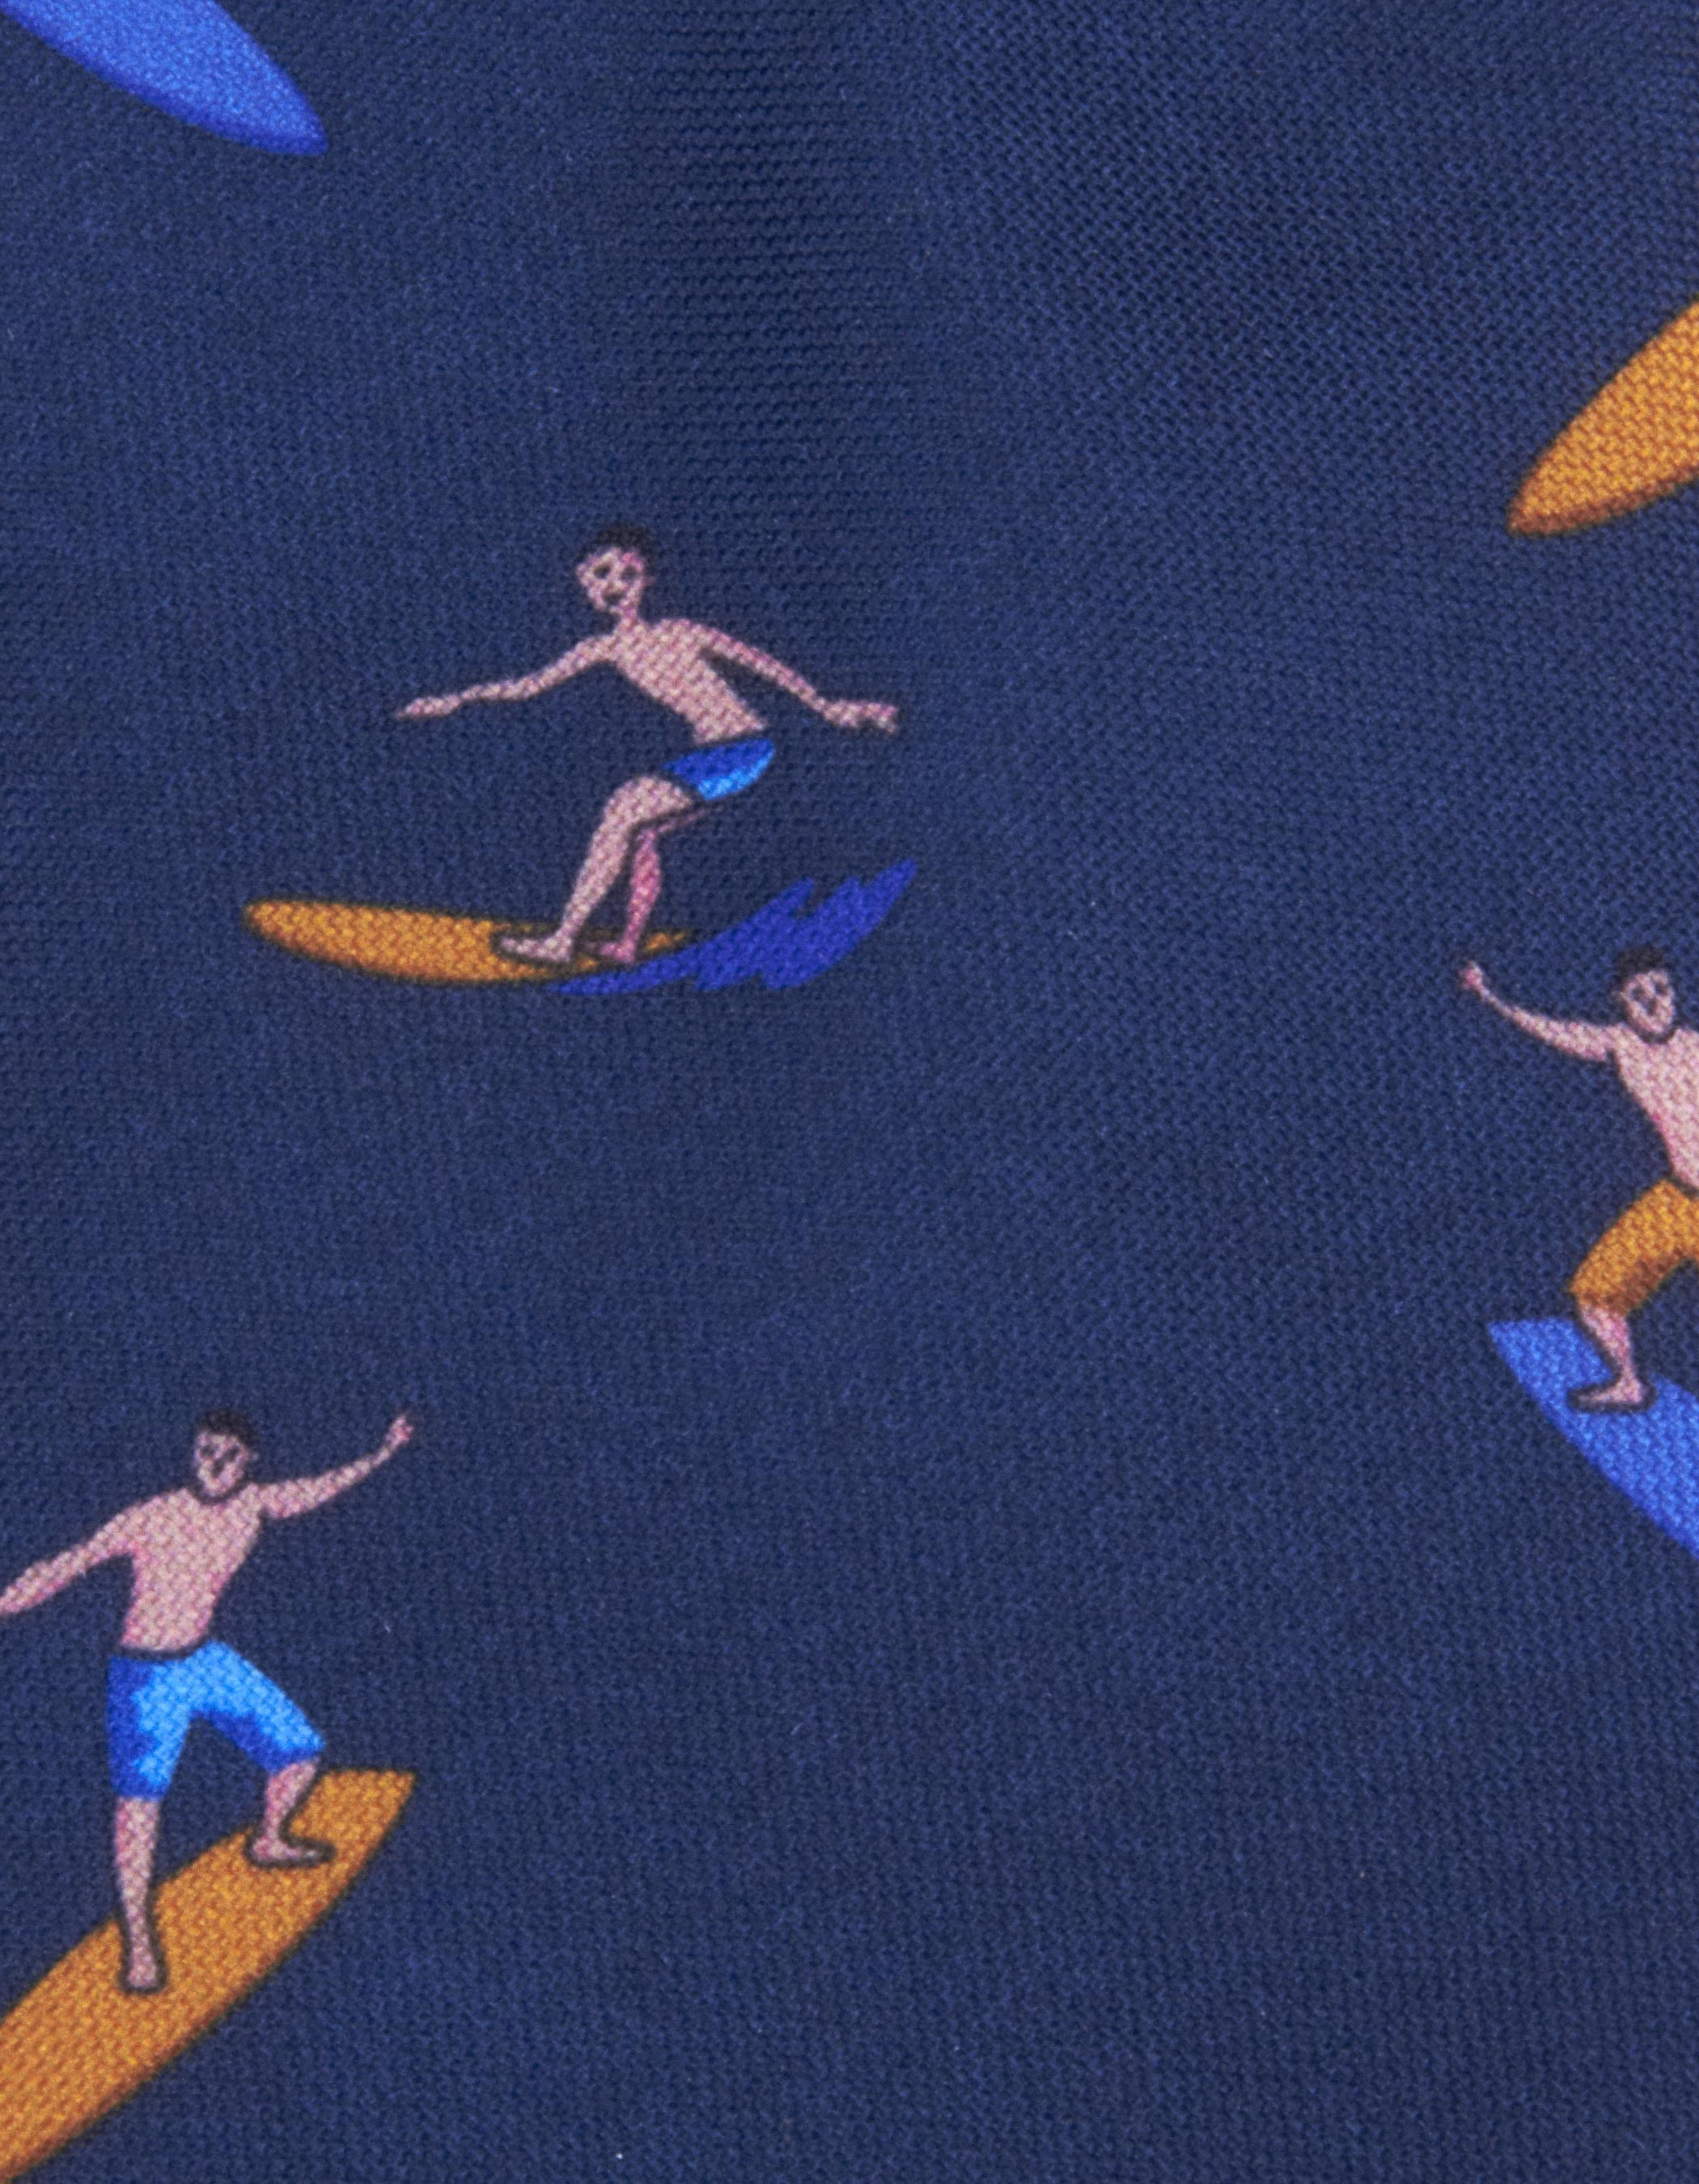 Blue surfer tie 1